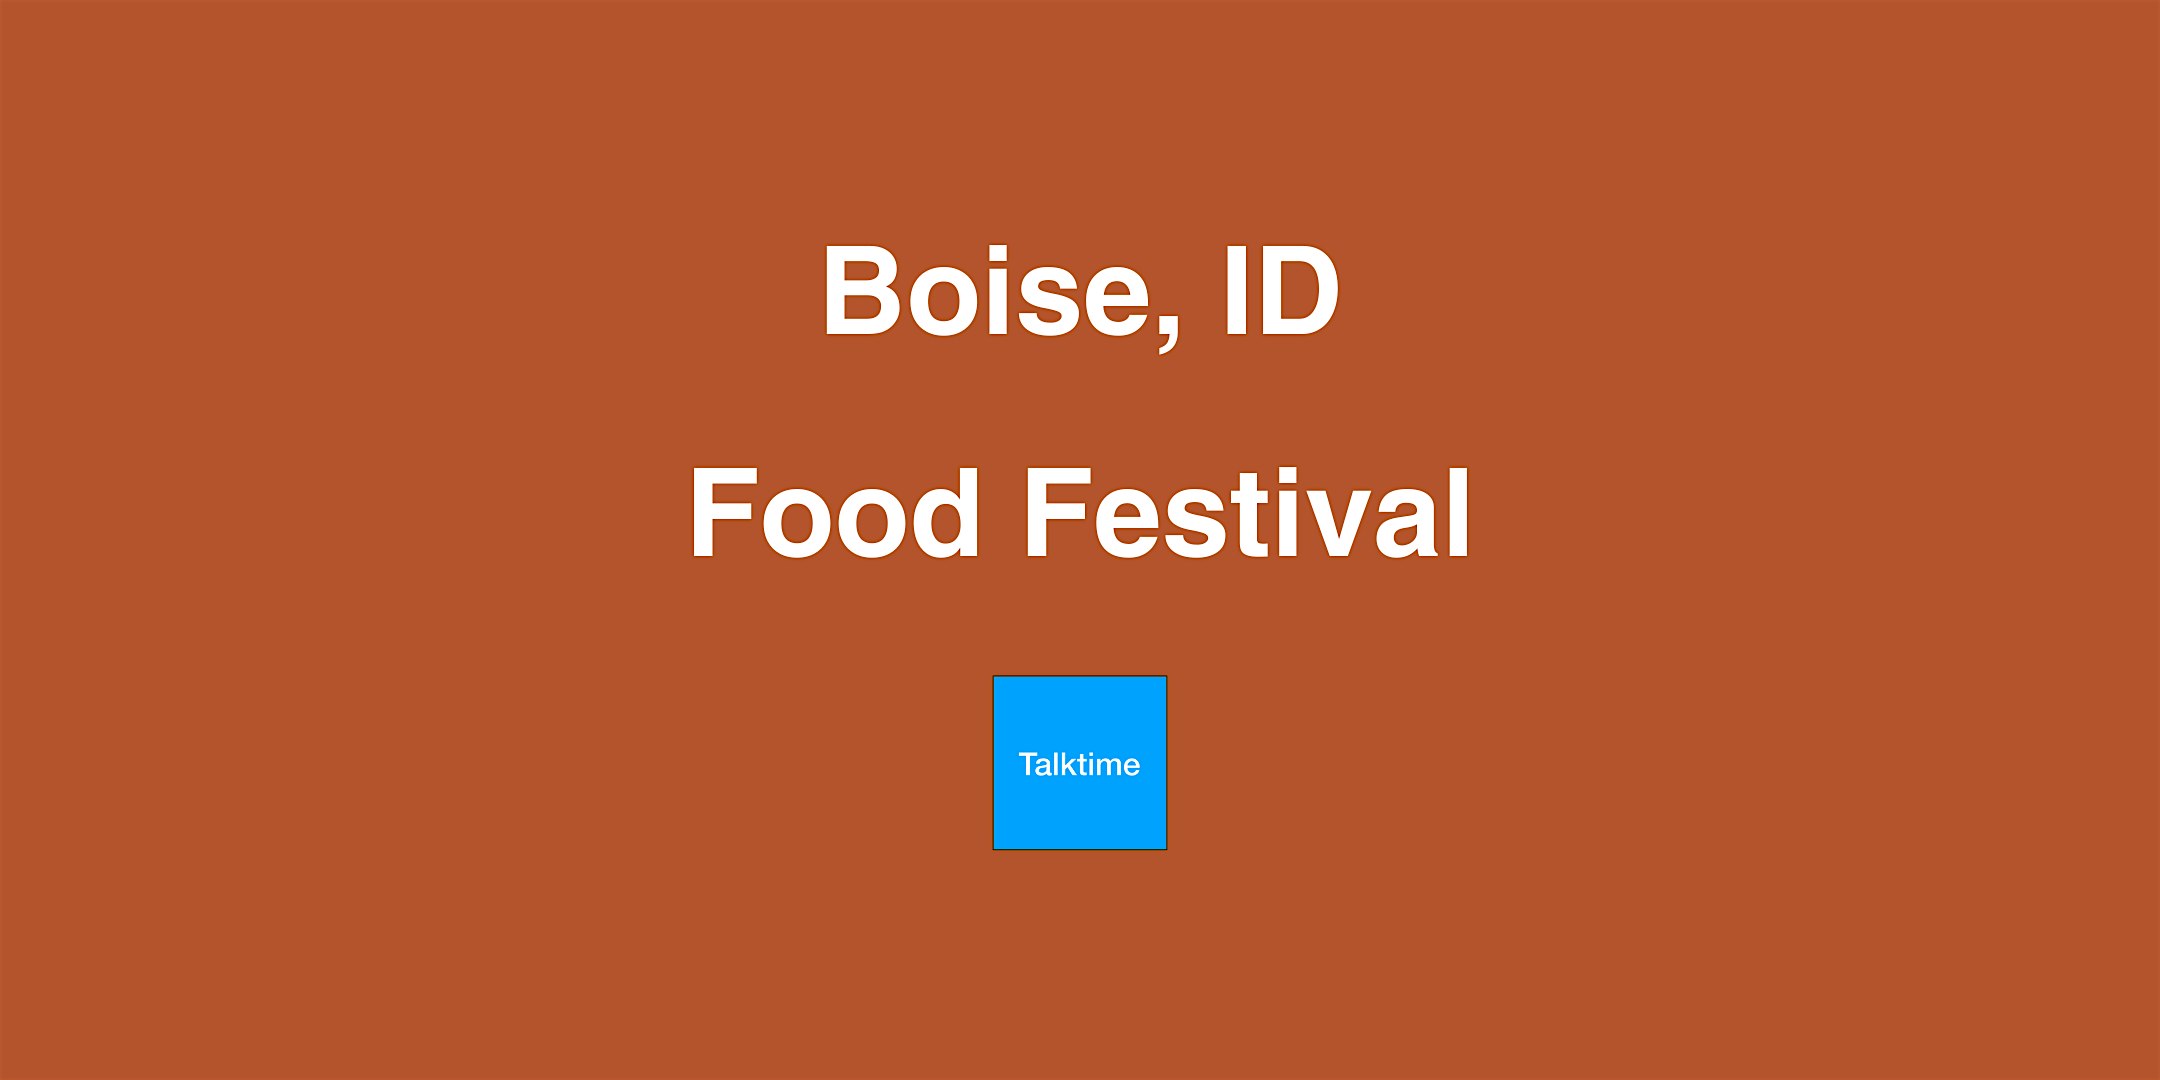 Food Festival - Boise